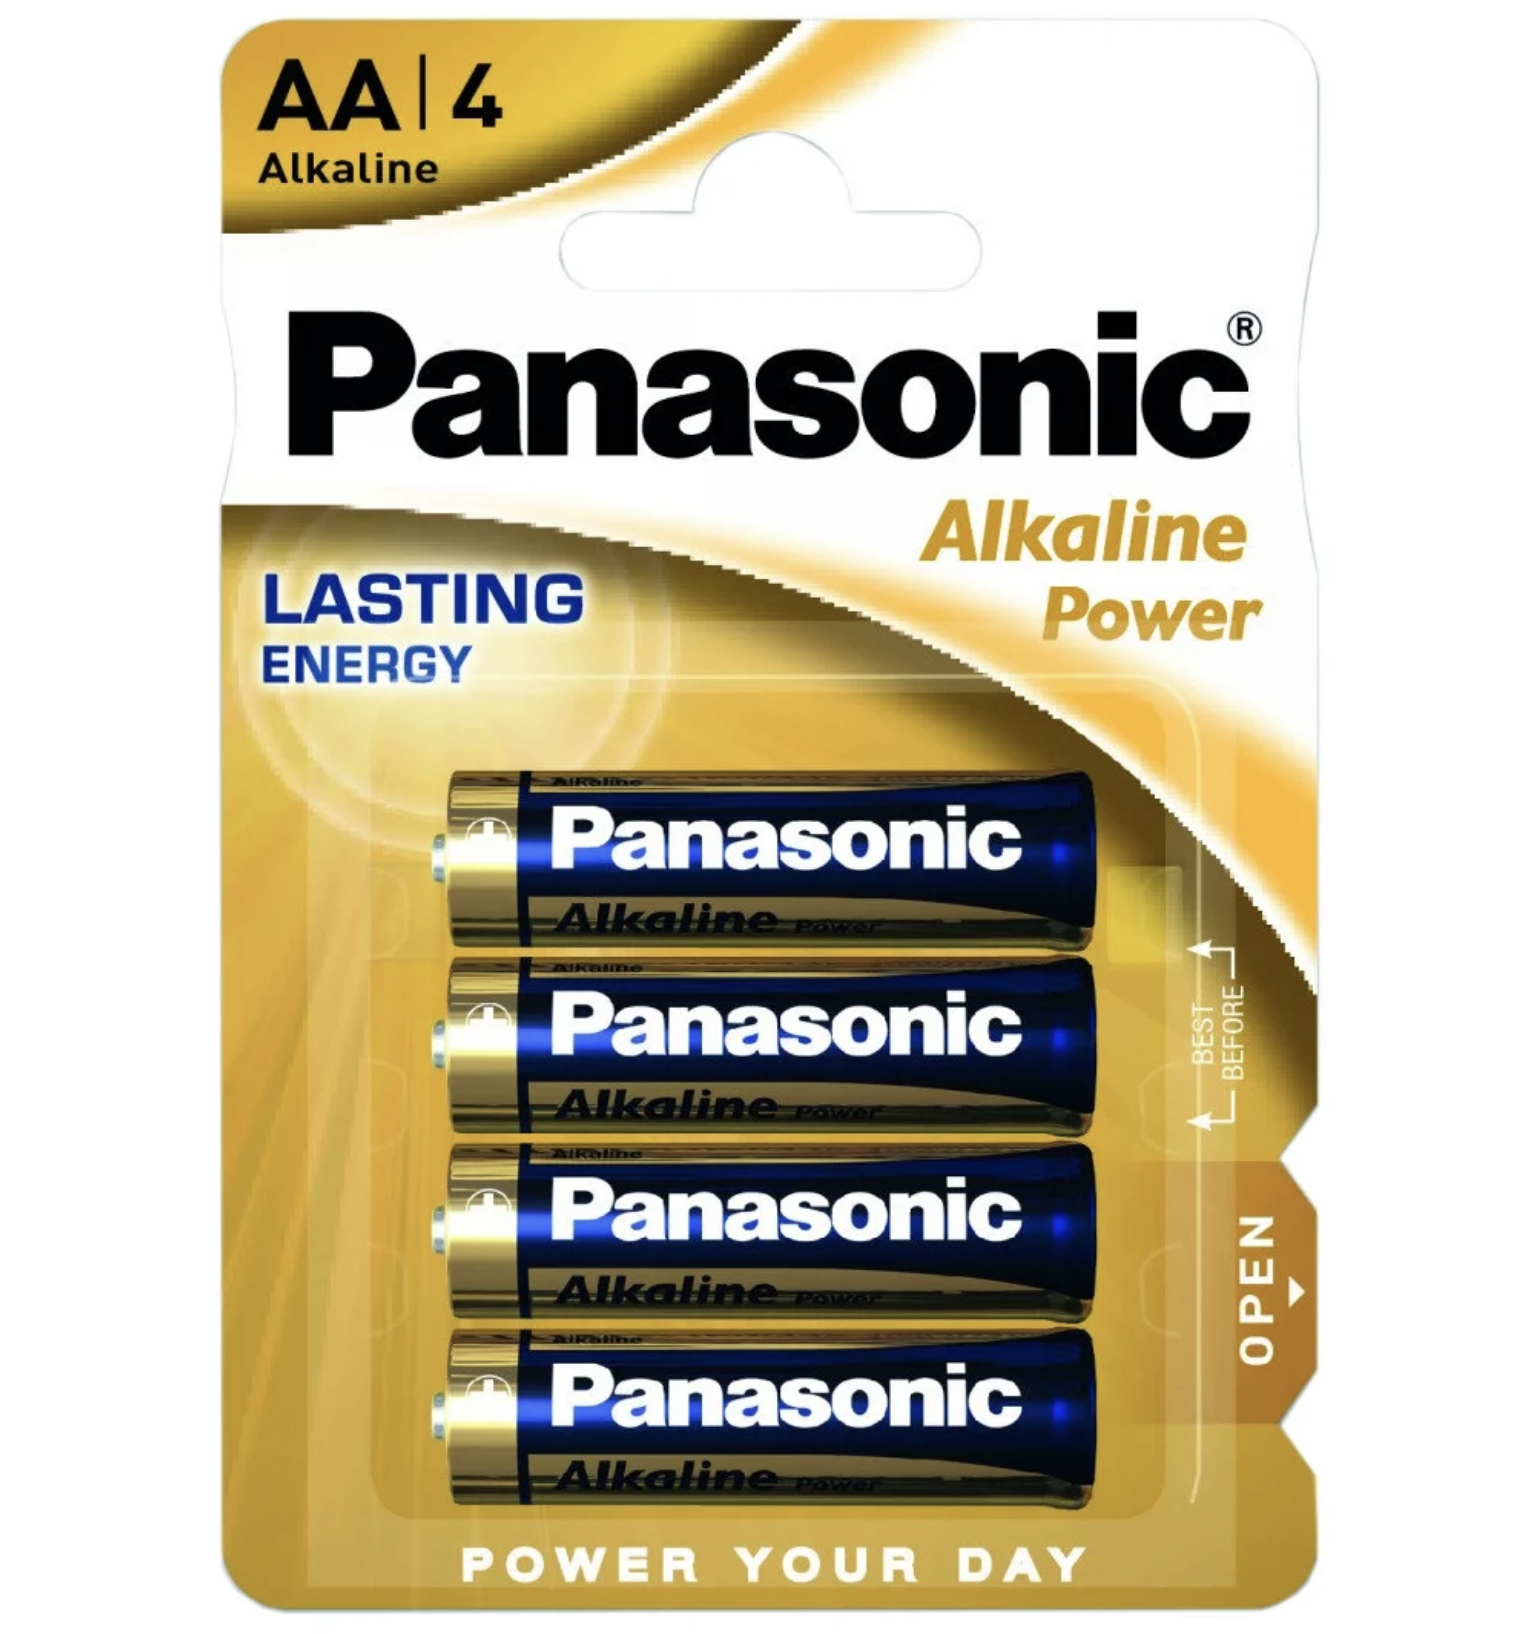   / Panasonic -    Alkaline Power Lasting Energy LR6 AA 4 